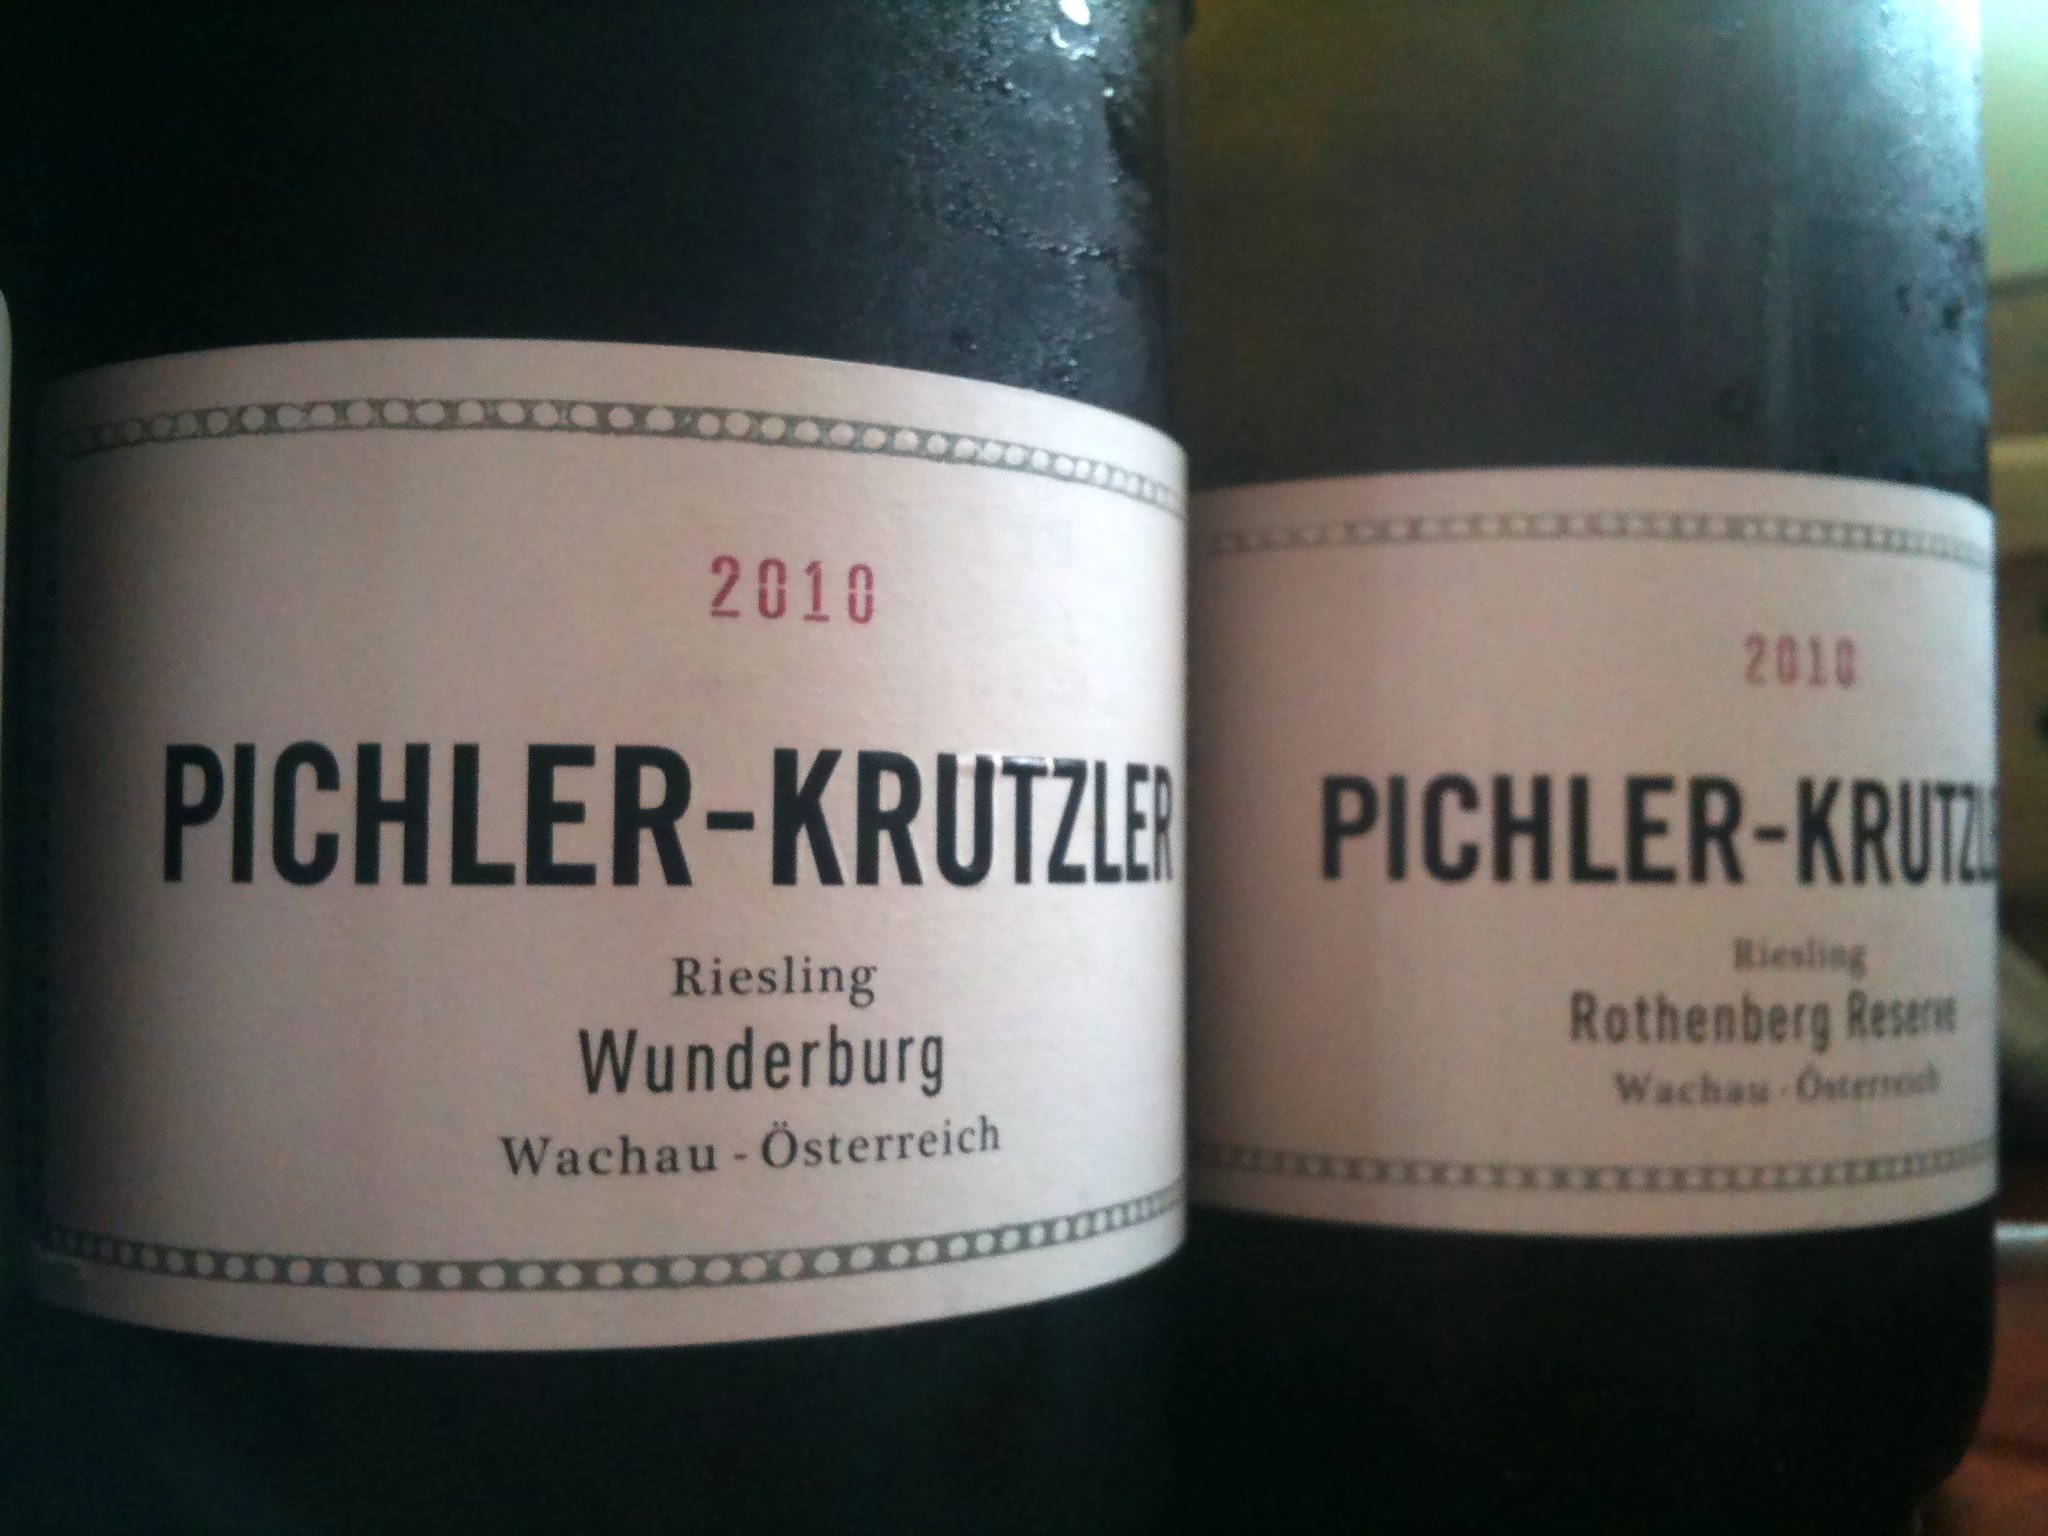 Pichler-Krutzler Riesling Wunderburg 2010